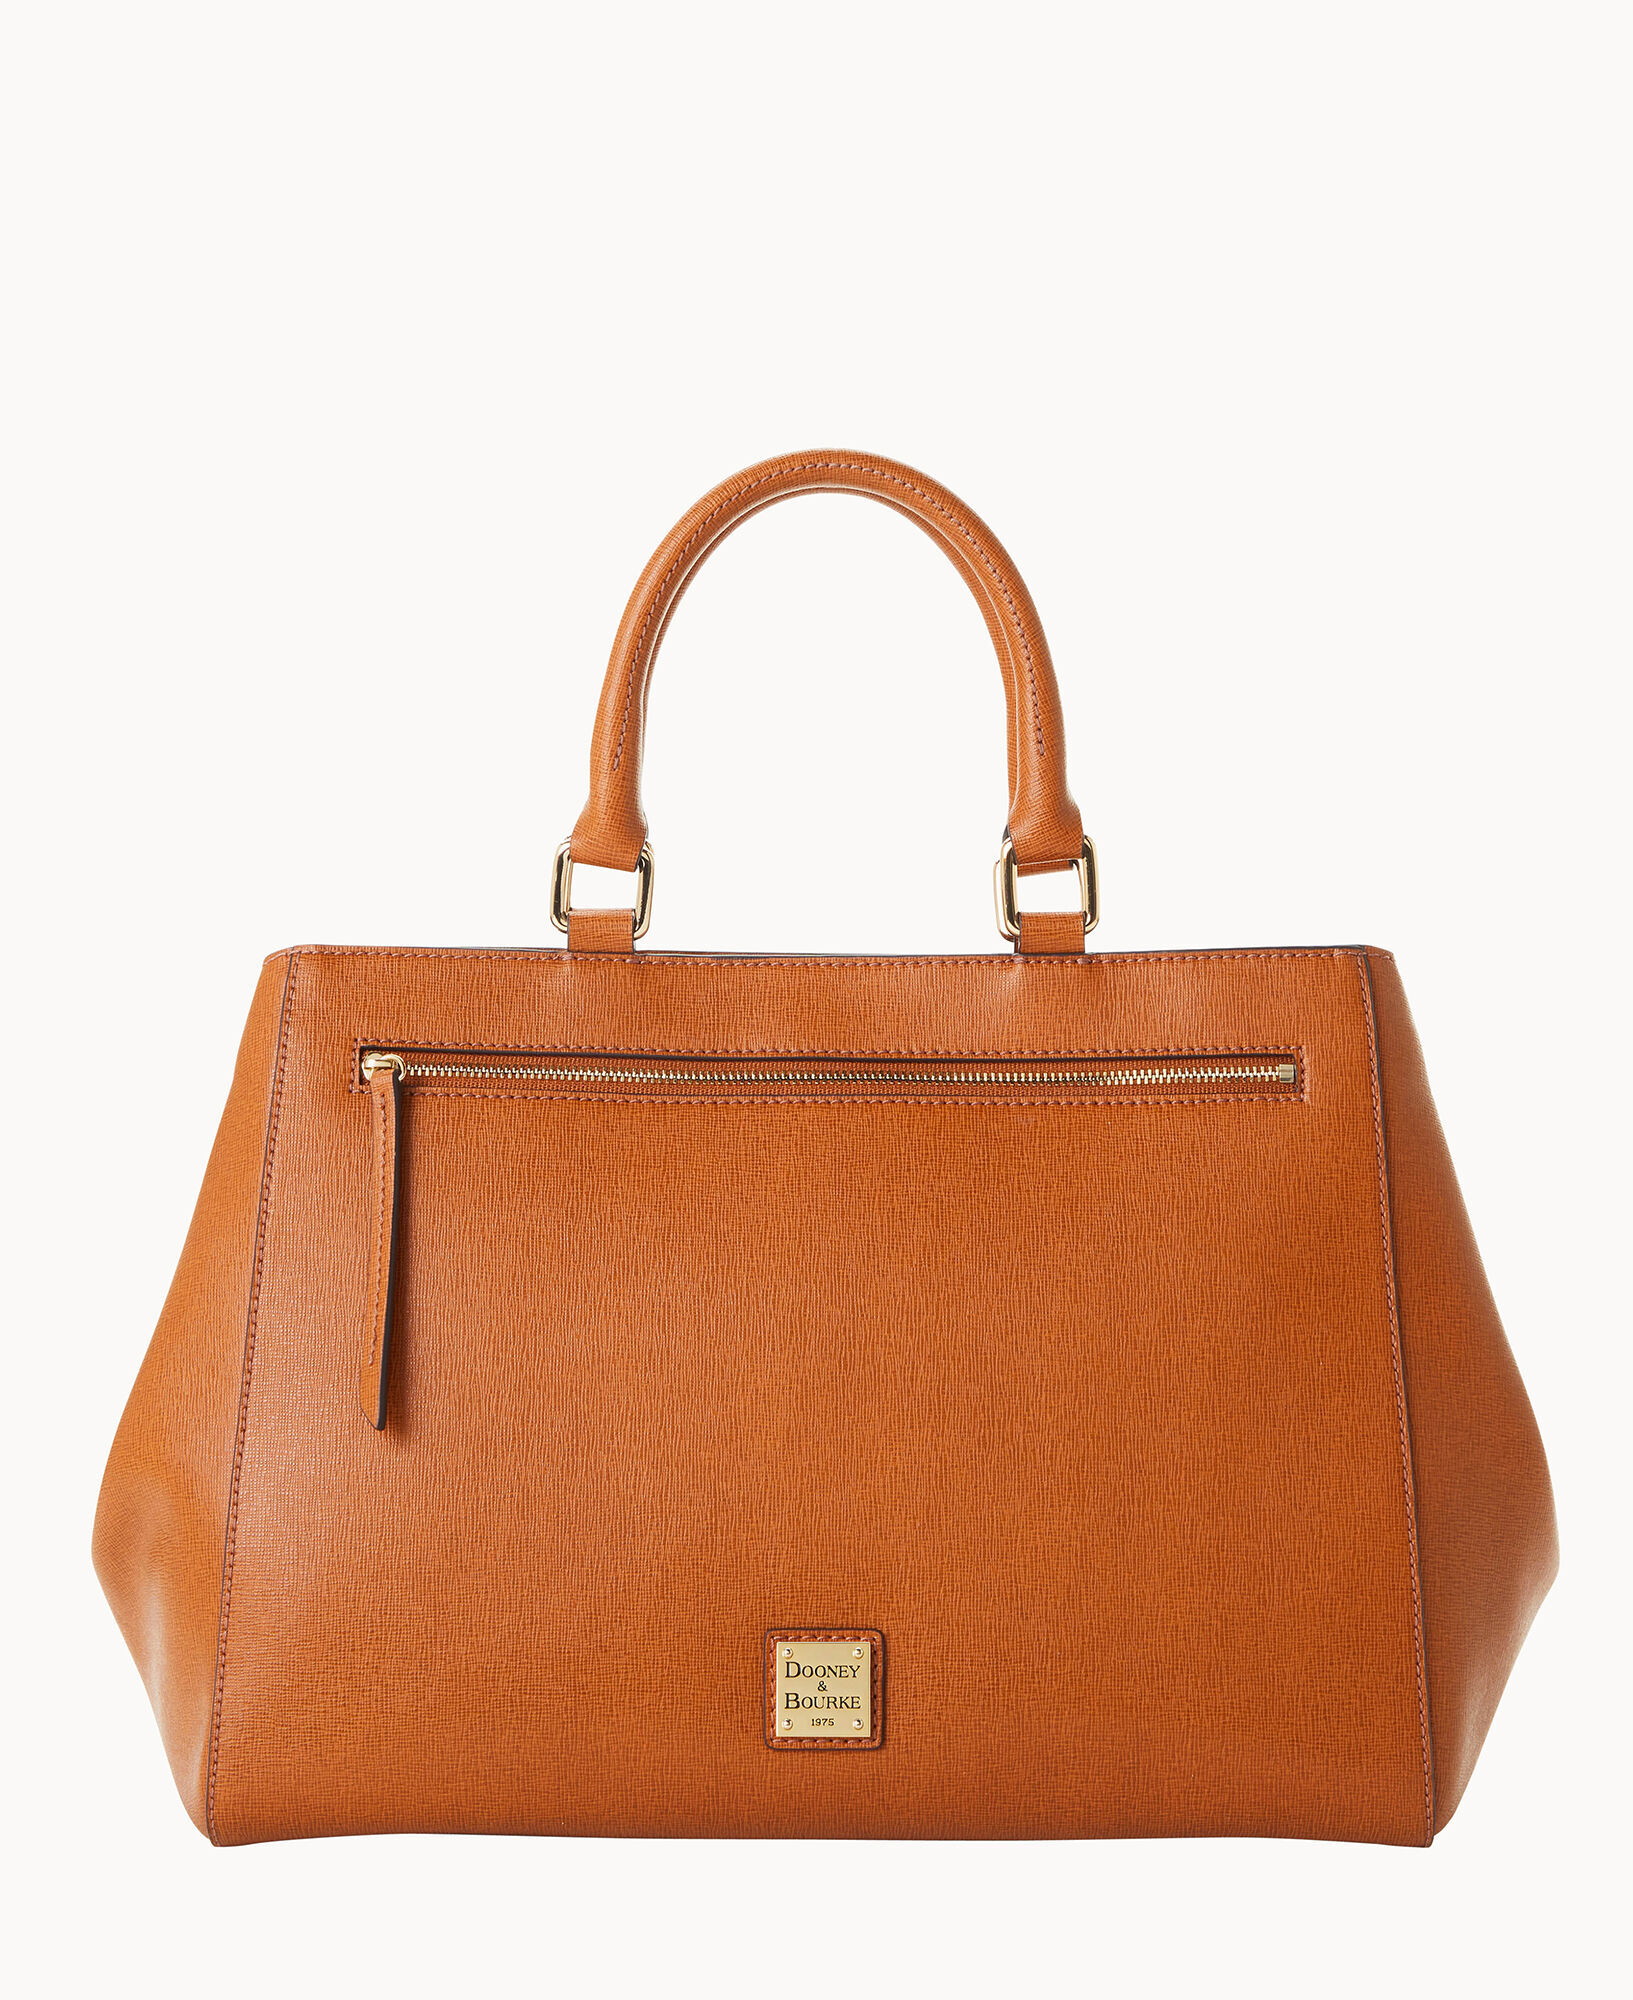 Dooney & Bourke Handbag, Saffiano Small Zip Crossbody - Amber